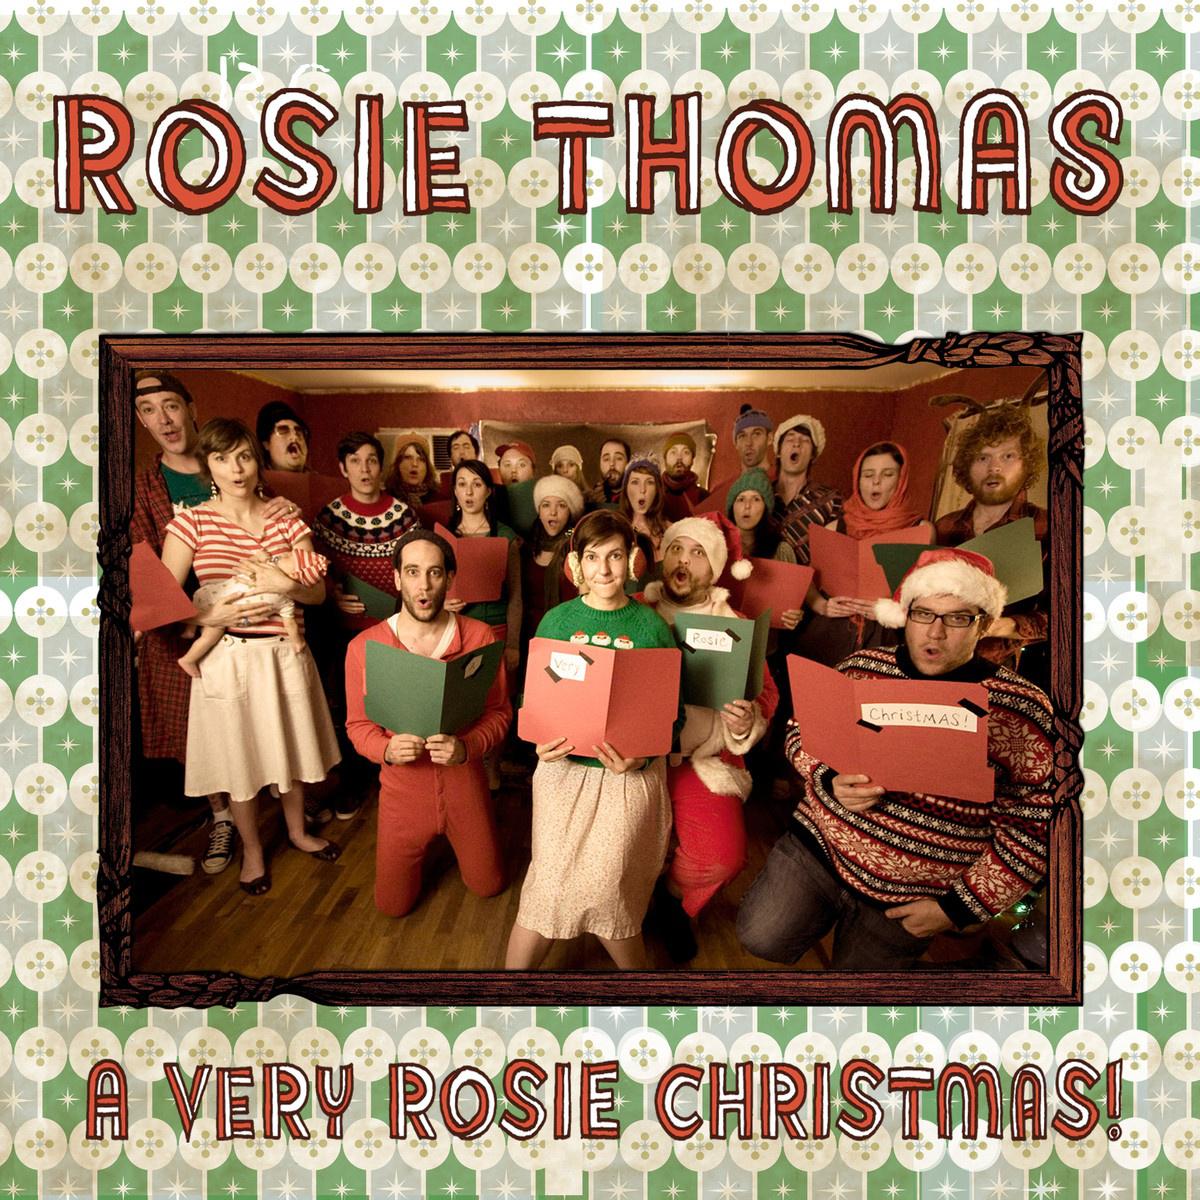 Rosie Thomas - Alone At Christmastime